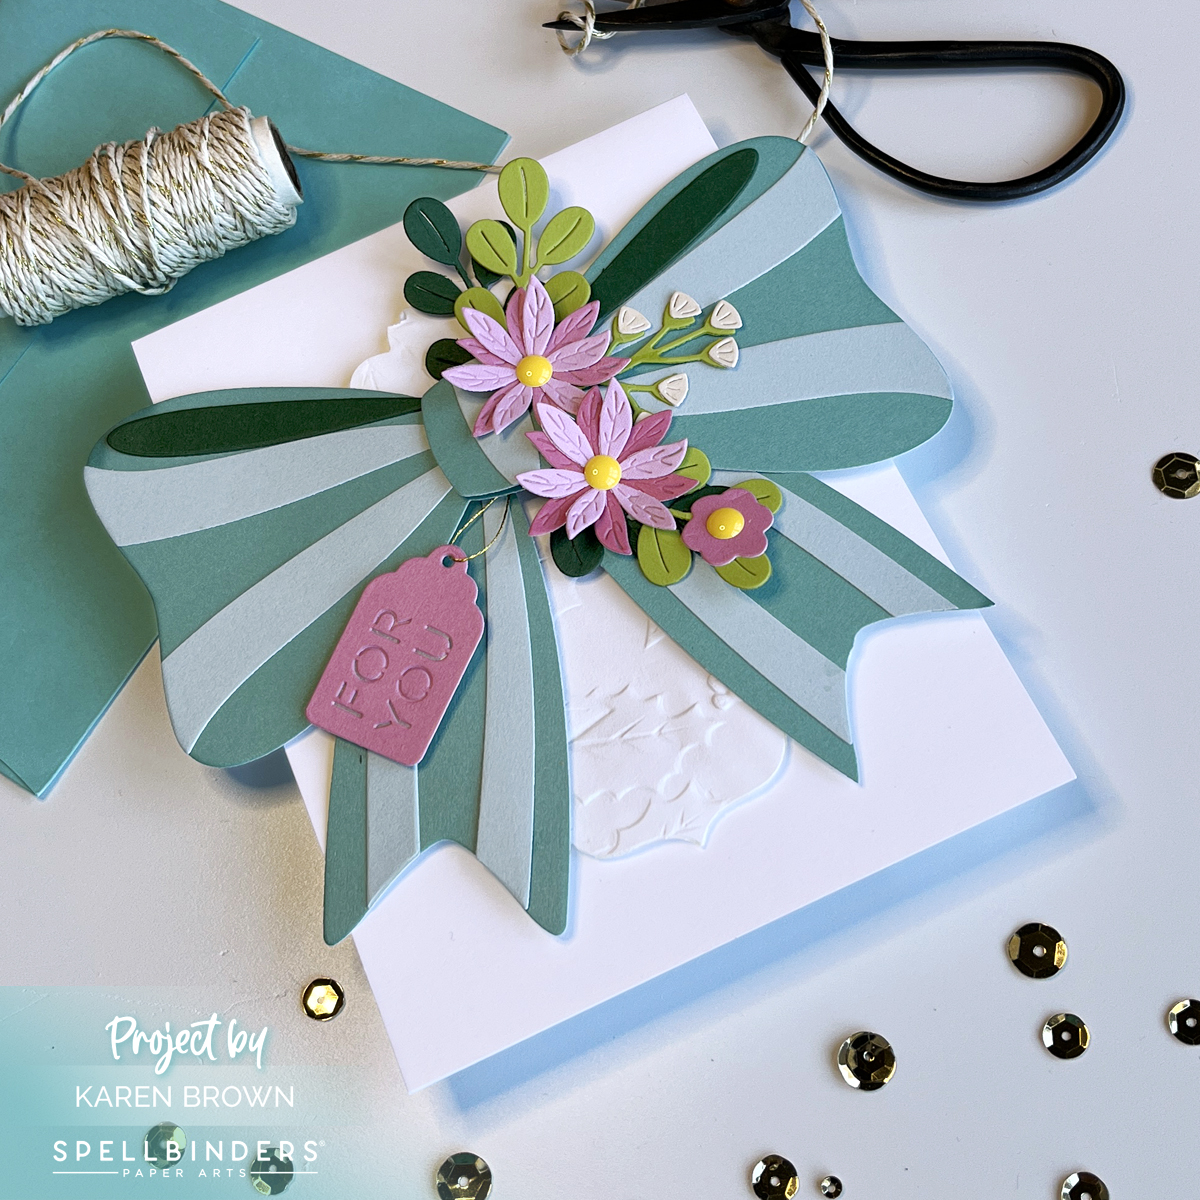 Spellbinders Merry & Bright Die Cut Bow + Petite Blooms and Sentiments